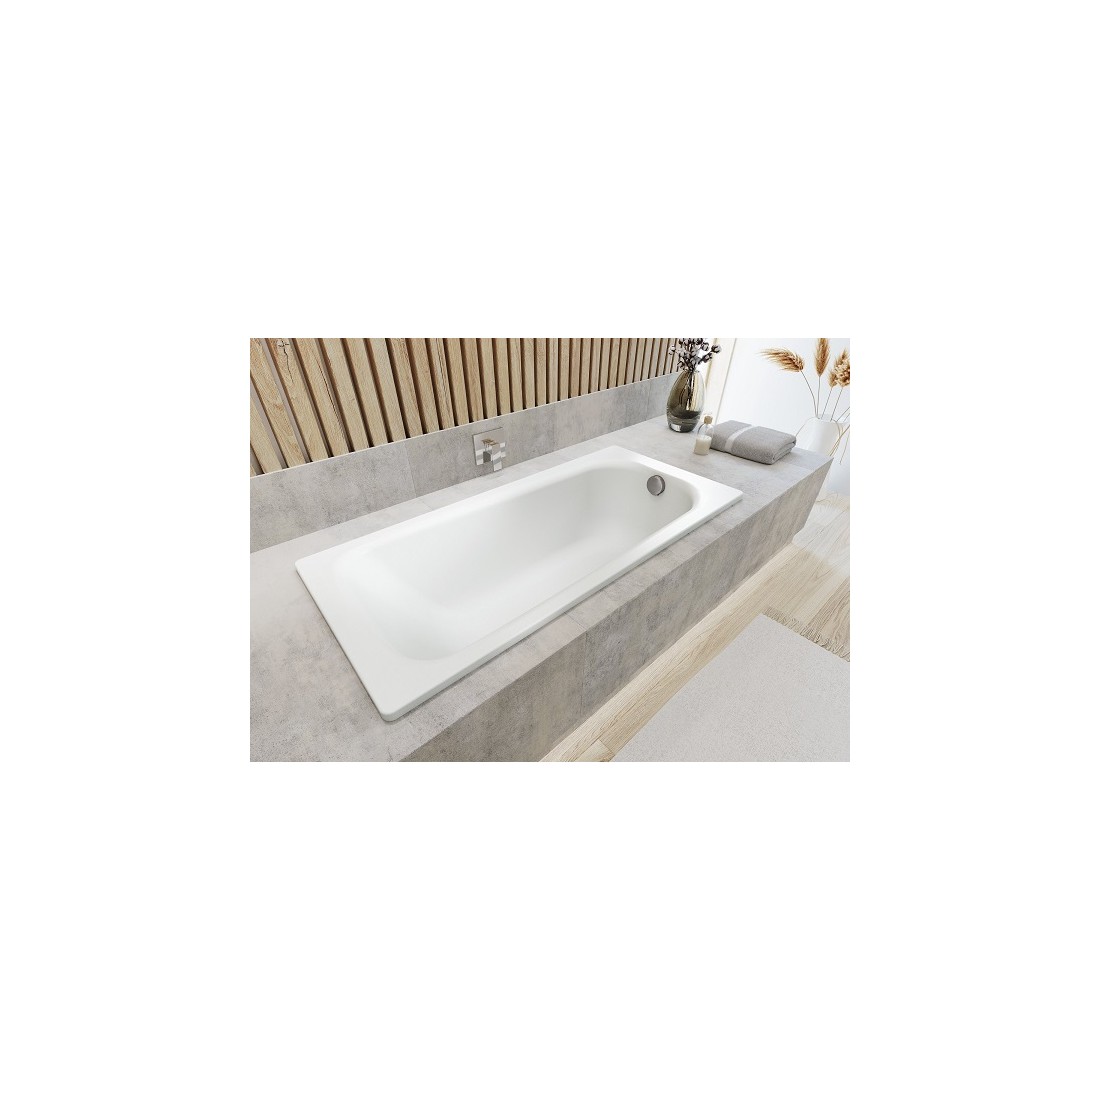 Plieninė vonia Kaldewei Saniform Plus 170x75x41 su EasyClean ir full antislip dangomis, mod. 373-1